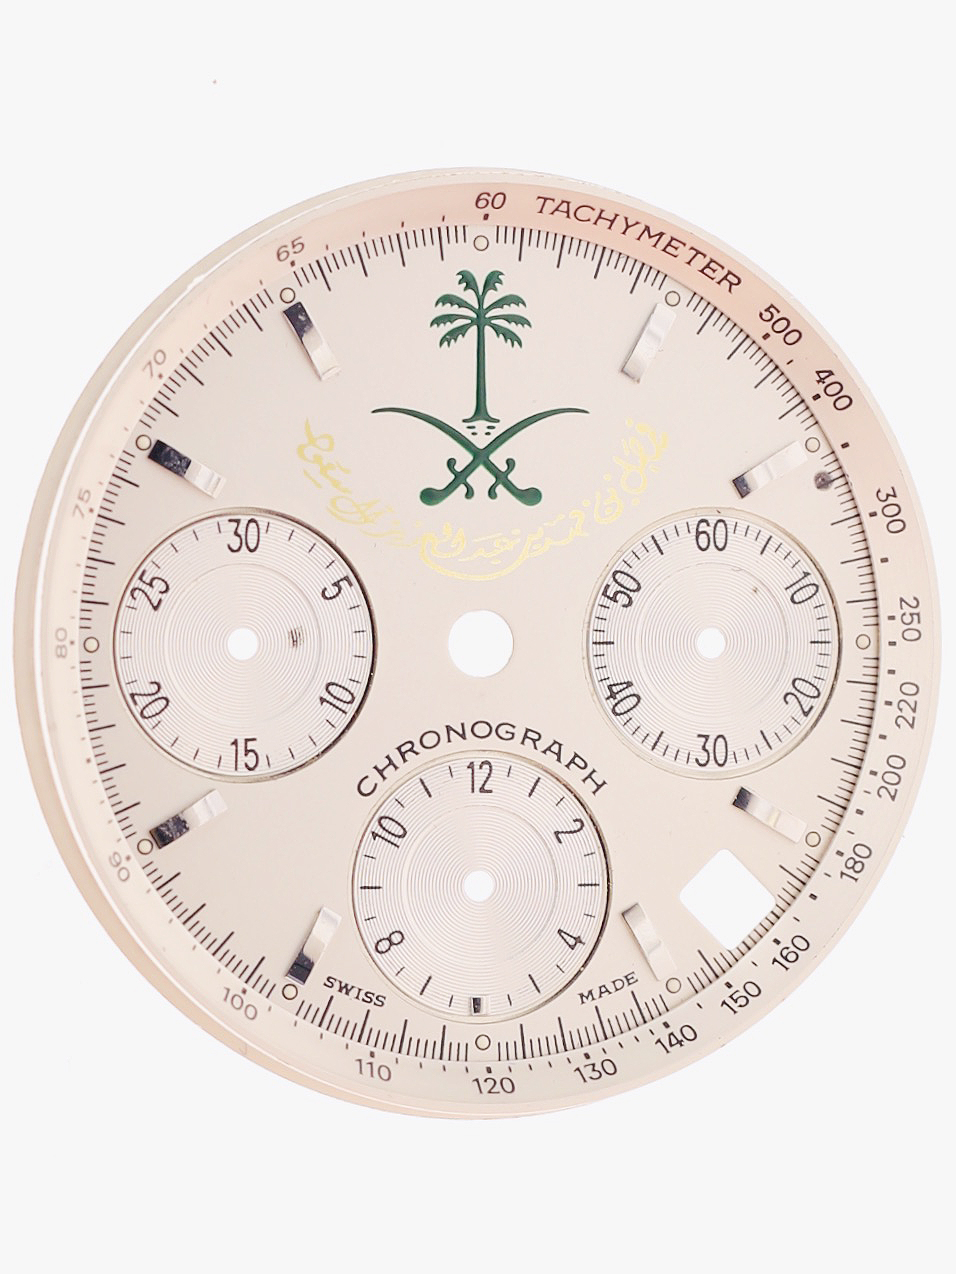 Patek Philippe, Very Rare and Fine… | Lot 224, Exclusive Timepieces |  Monaco Legend Auctions